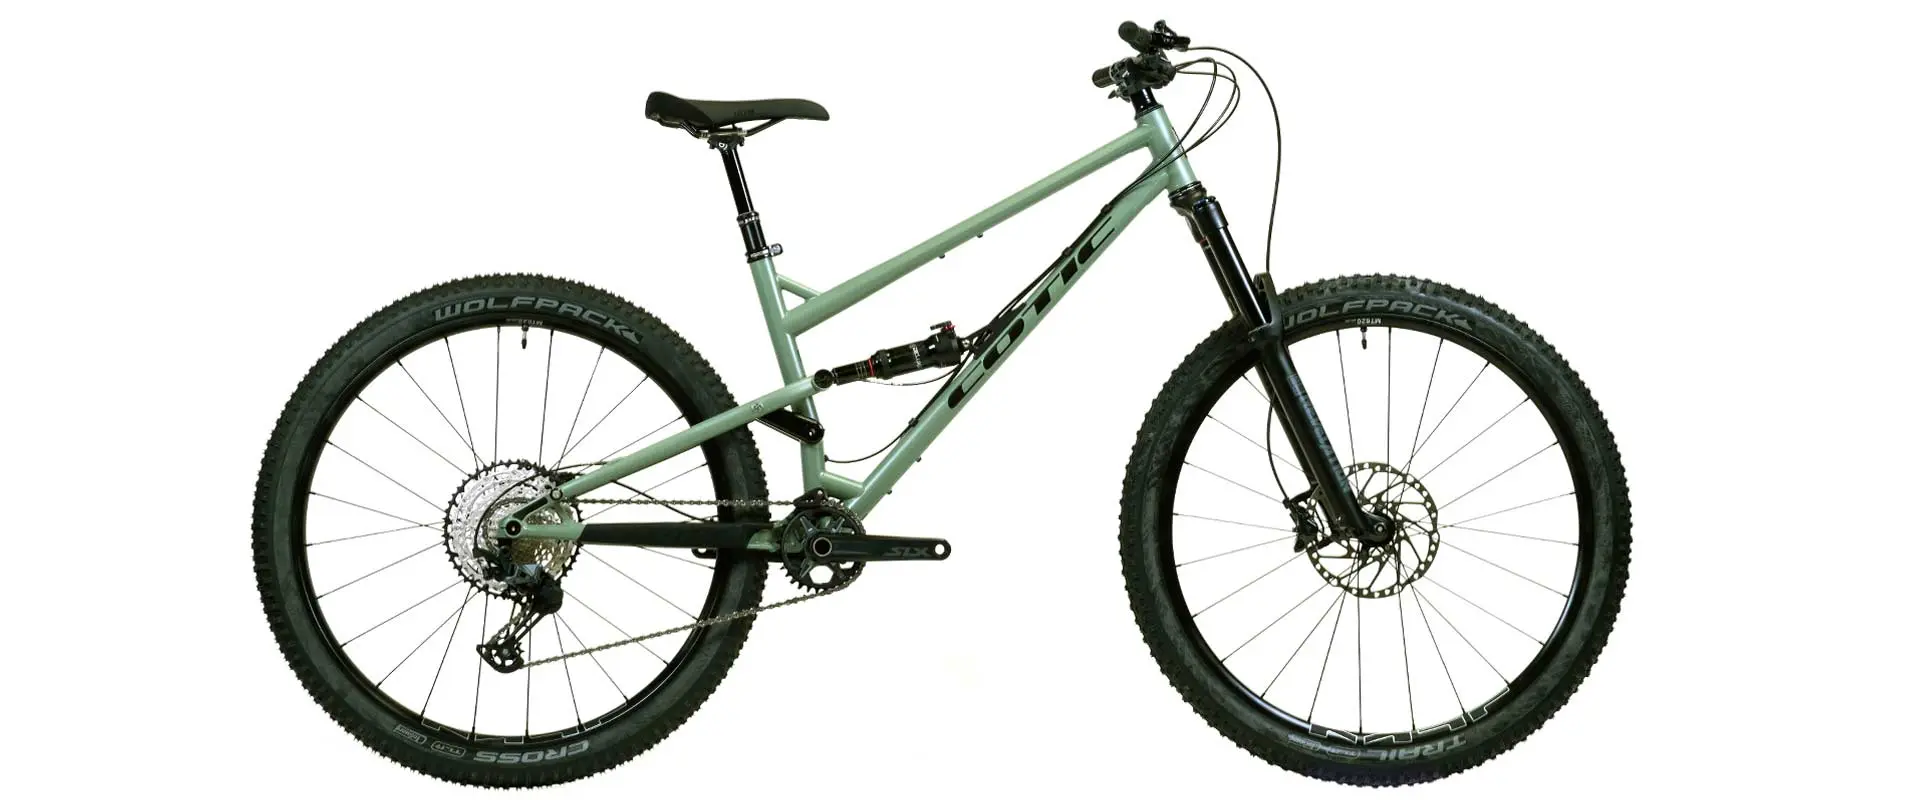 Cotic Jeht in Matte Sage, steel full suspension mountain bike, 29 mountain bike, 140mm travel, reynolds 853